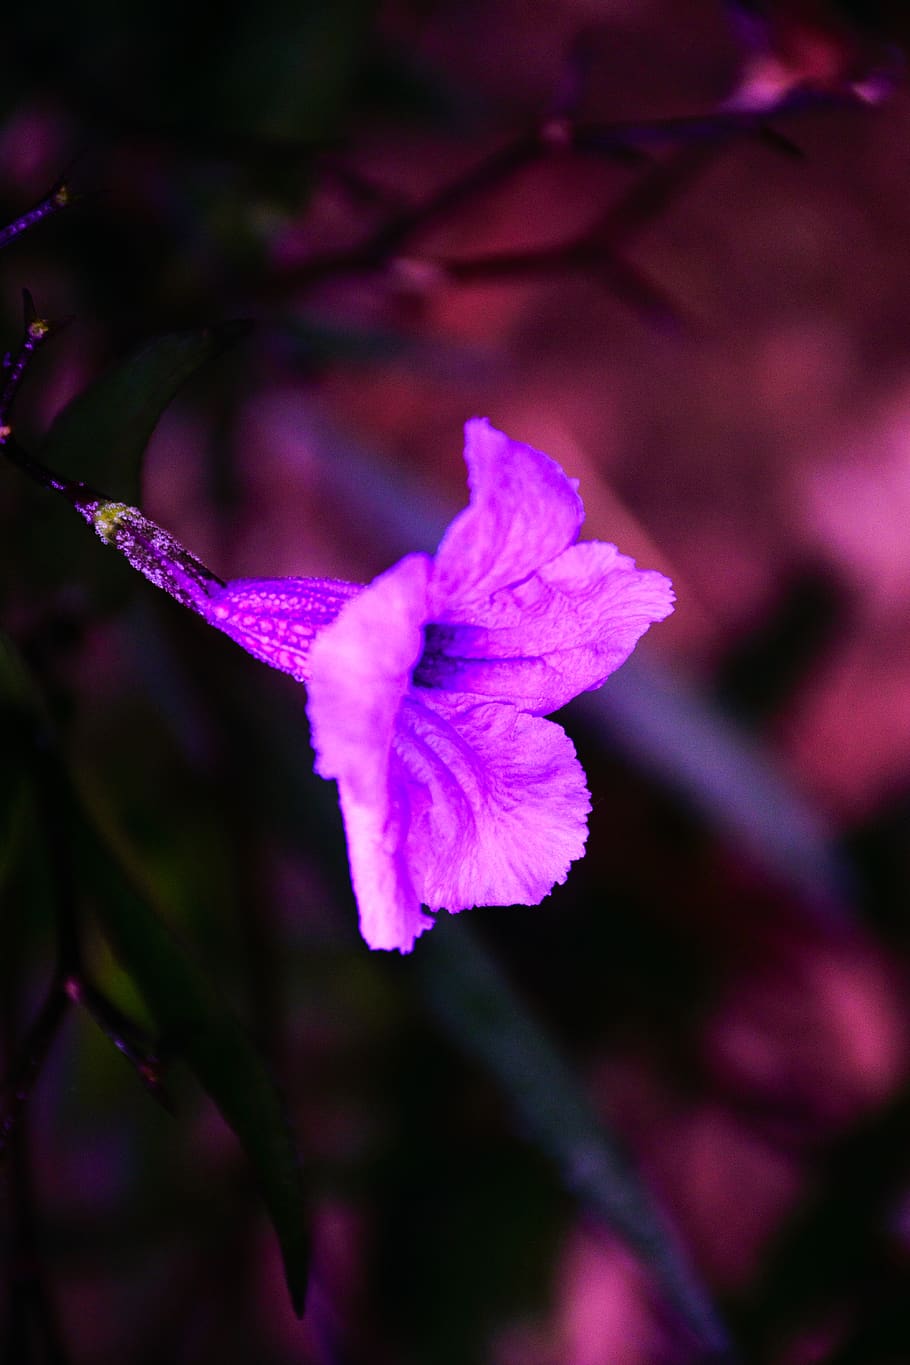 Free stock photo of purple coneflower closeup